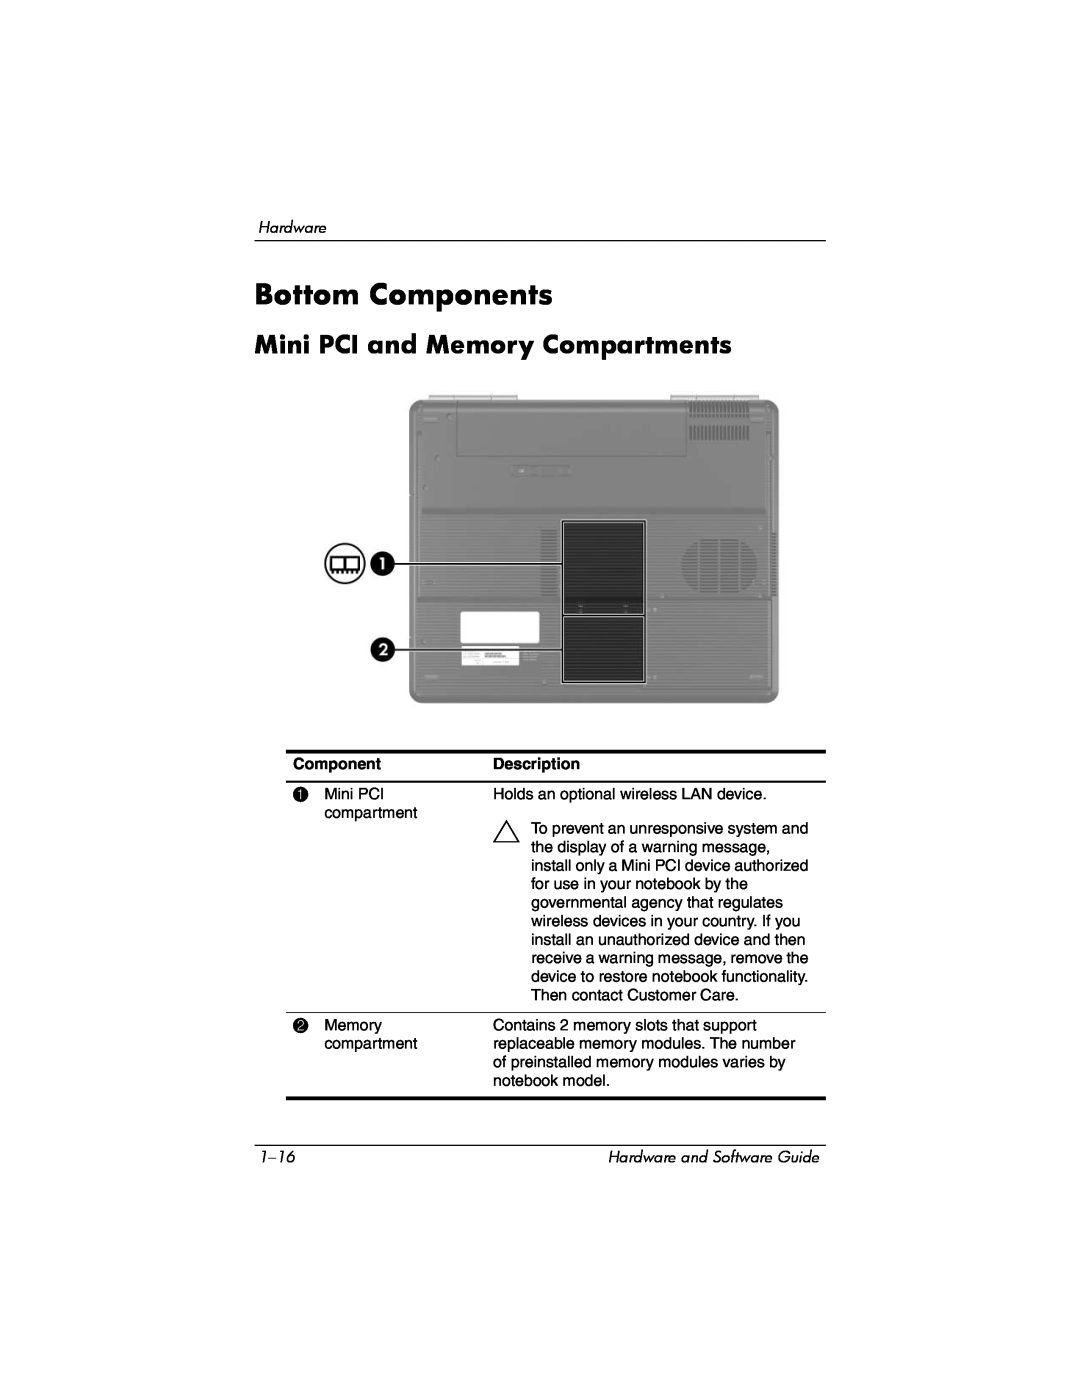 Compaq Presario M2000 manual Bottom Components, Mini PCI and Memory Compartments, Description 